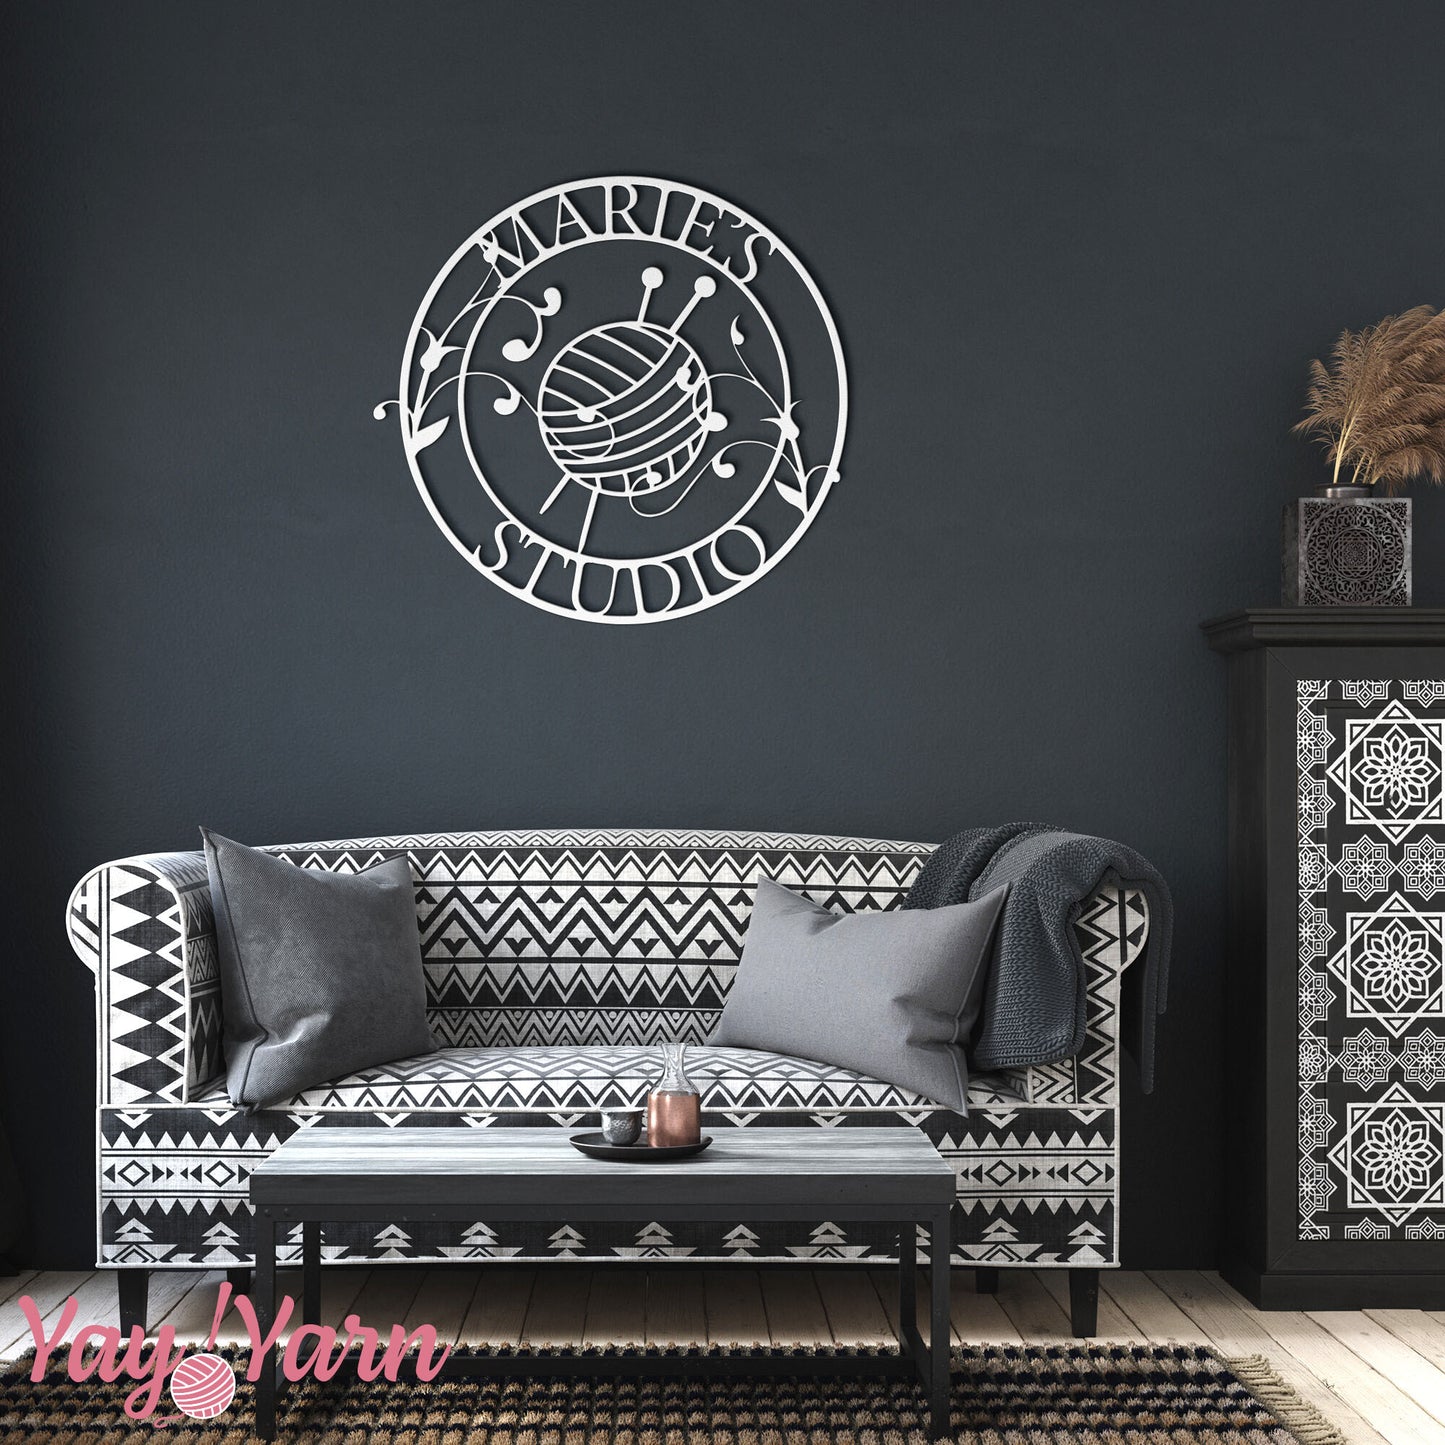 Knitting Studio Metal Wall Art Personalized White on Black Wall